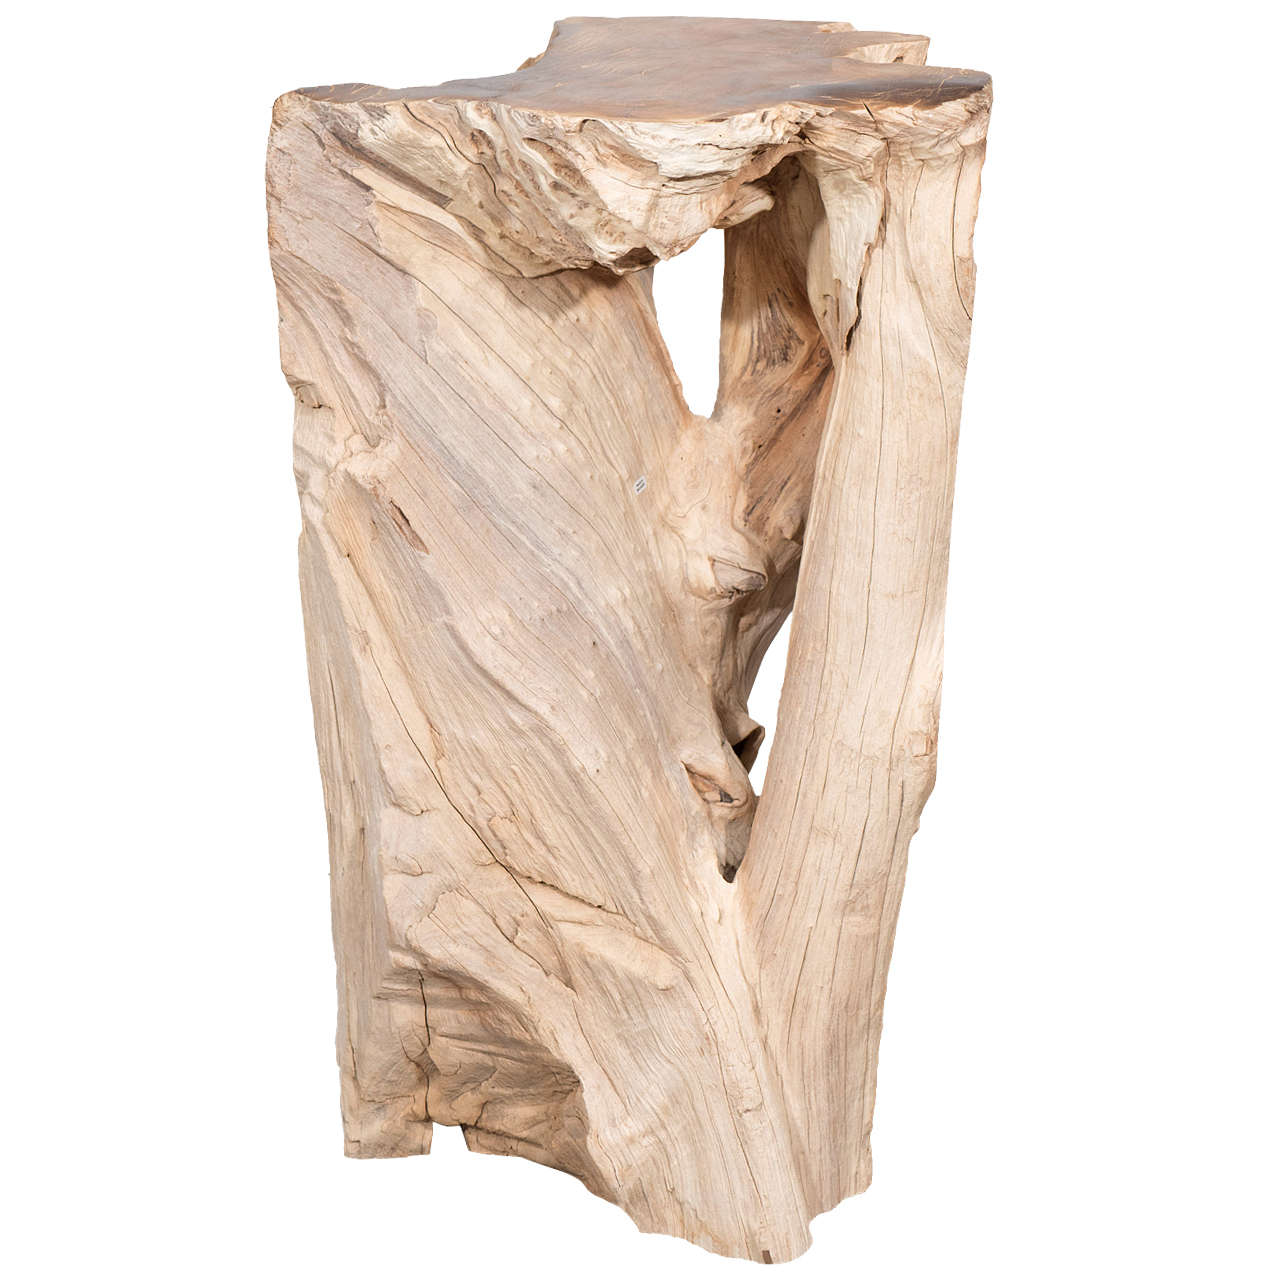 Organic Reclaimed Teak Wood Table Base or Pedestal